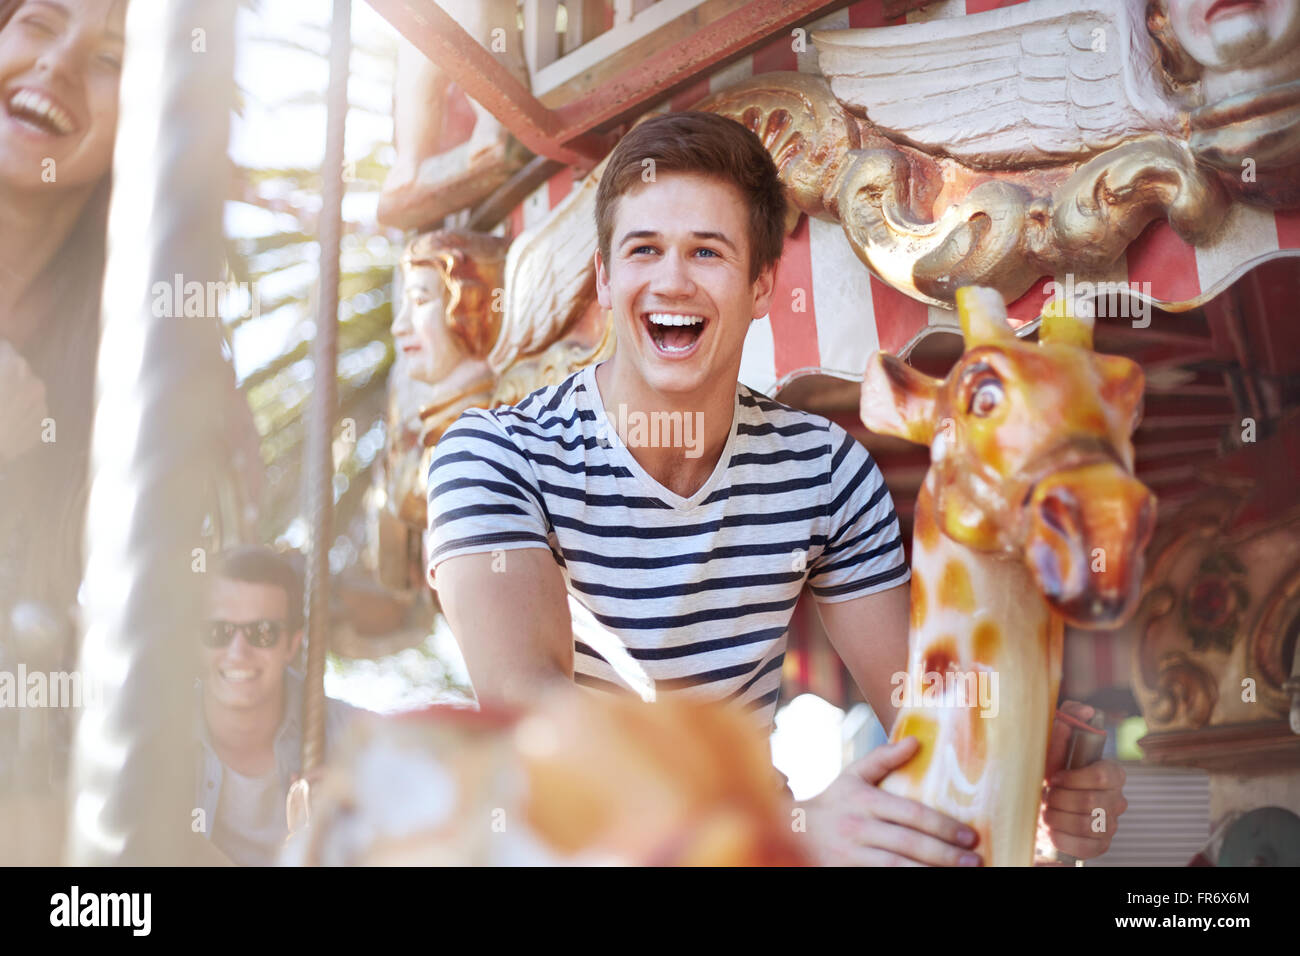 Enthusiastic young man riding carousel at amusement park Stock Photo